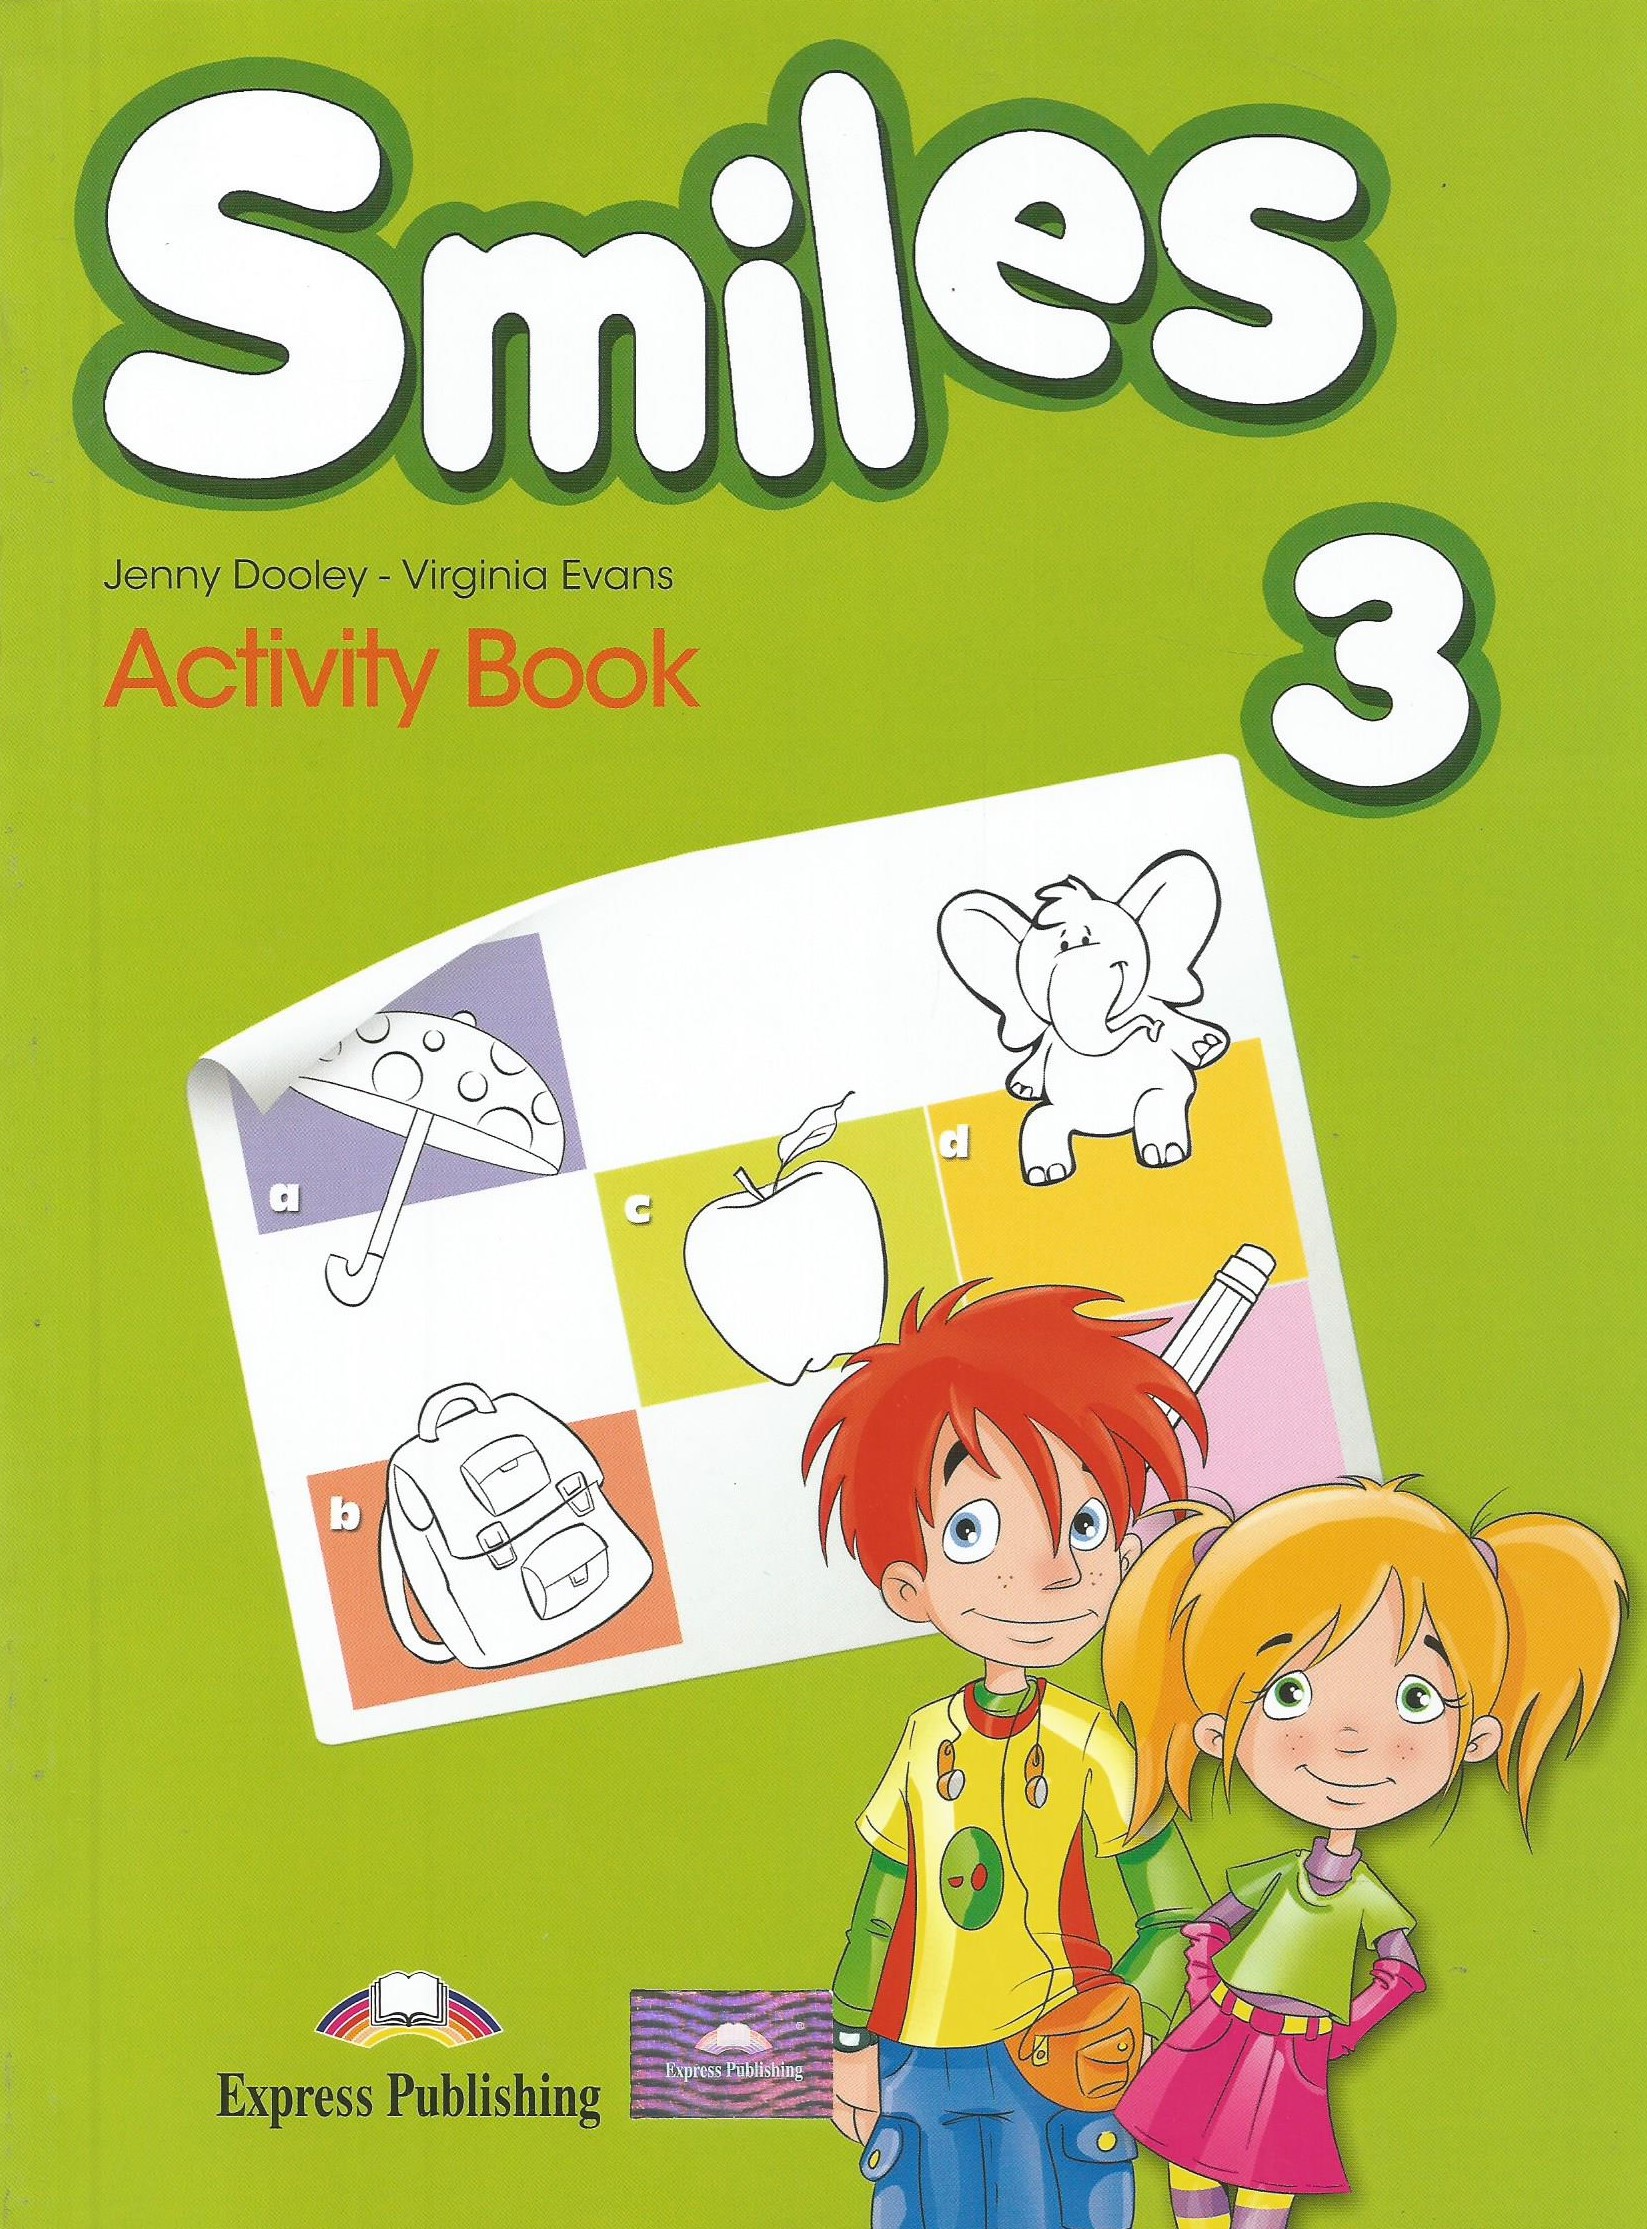 Smiles 3 Activity Book